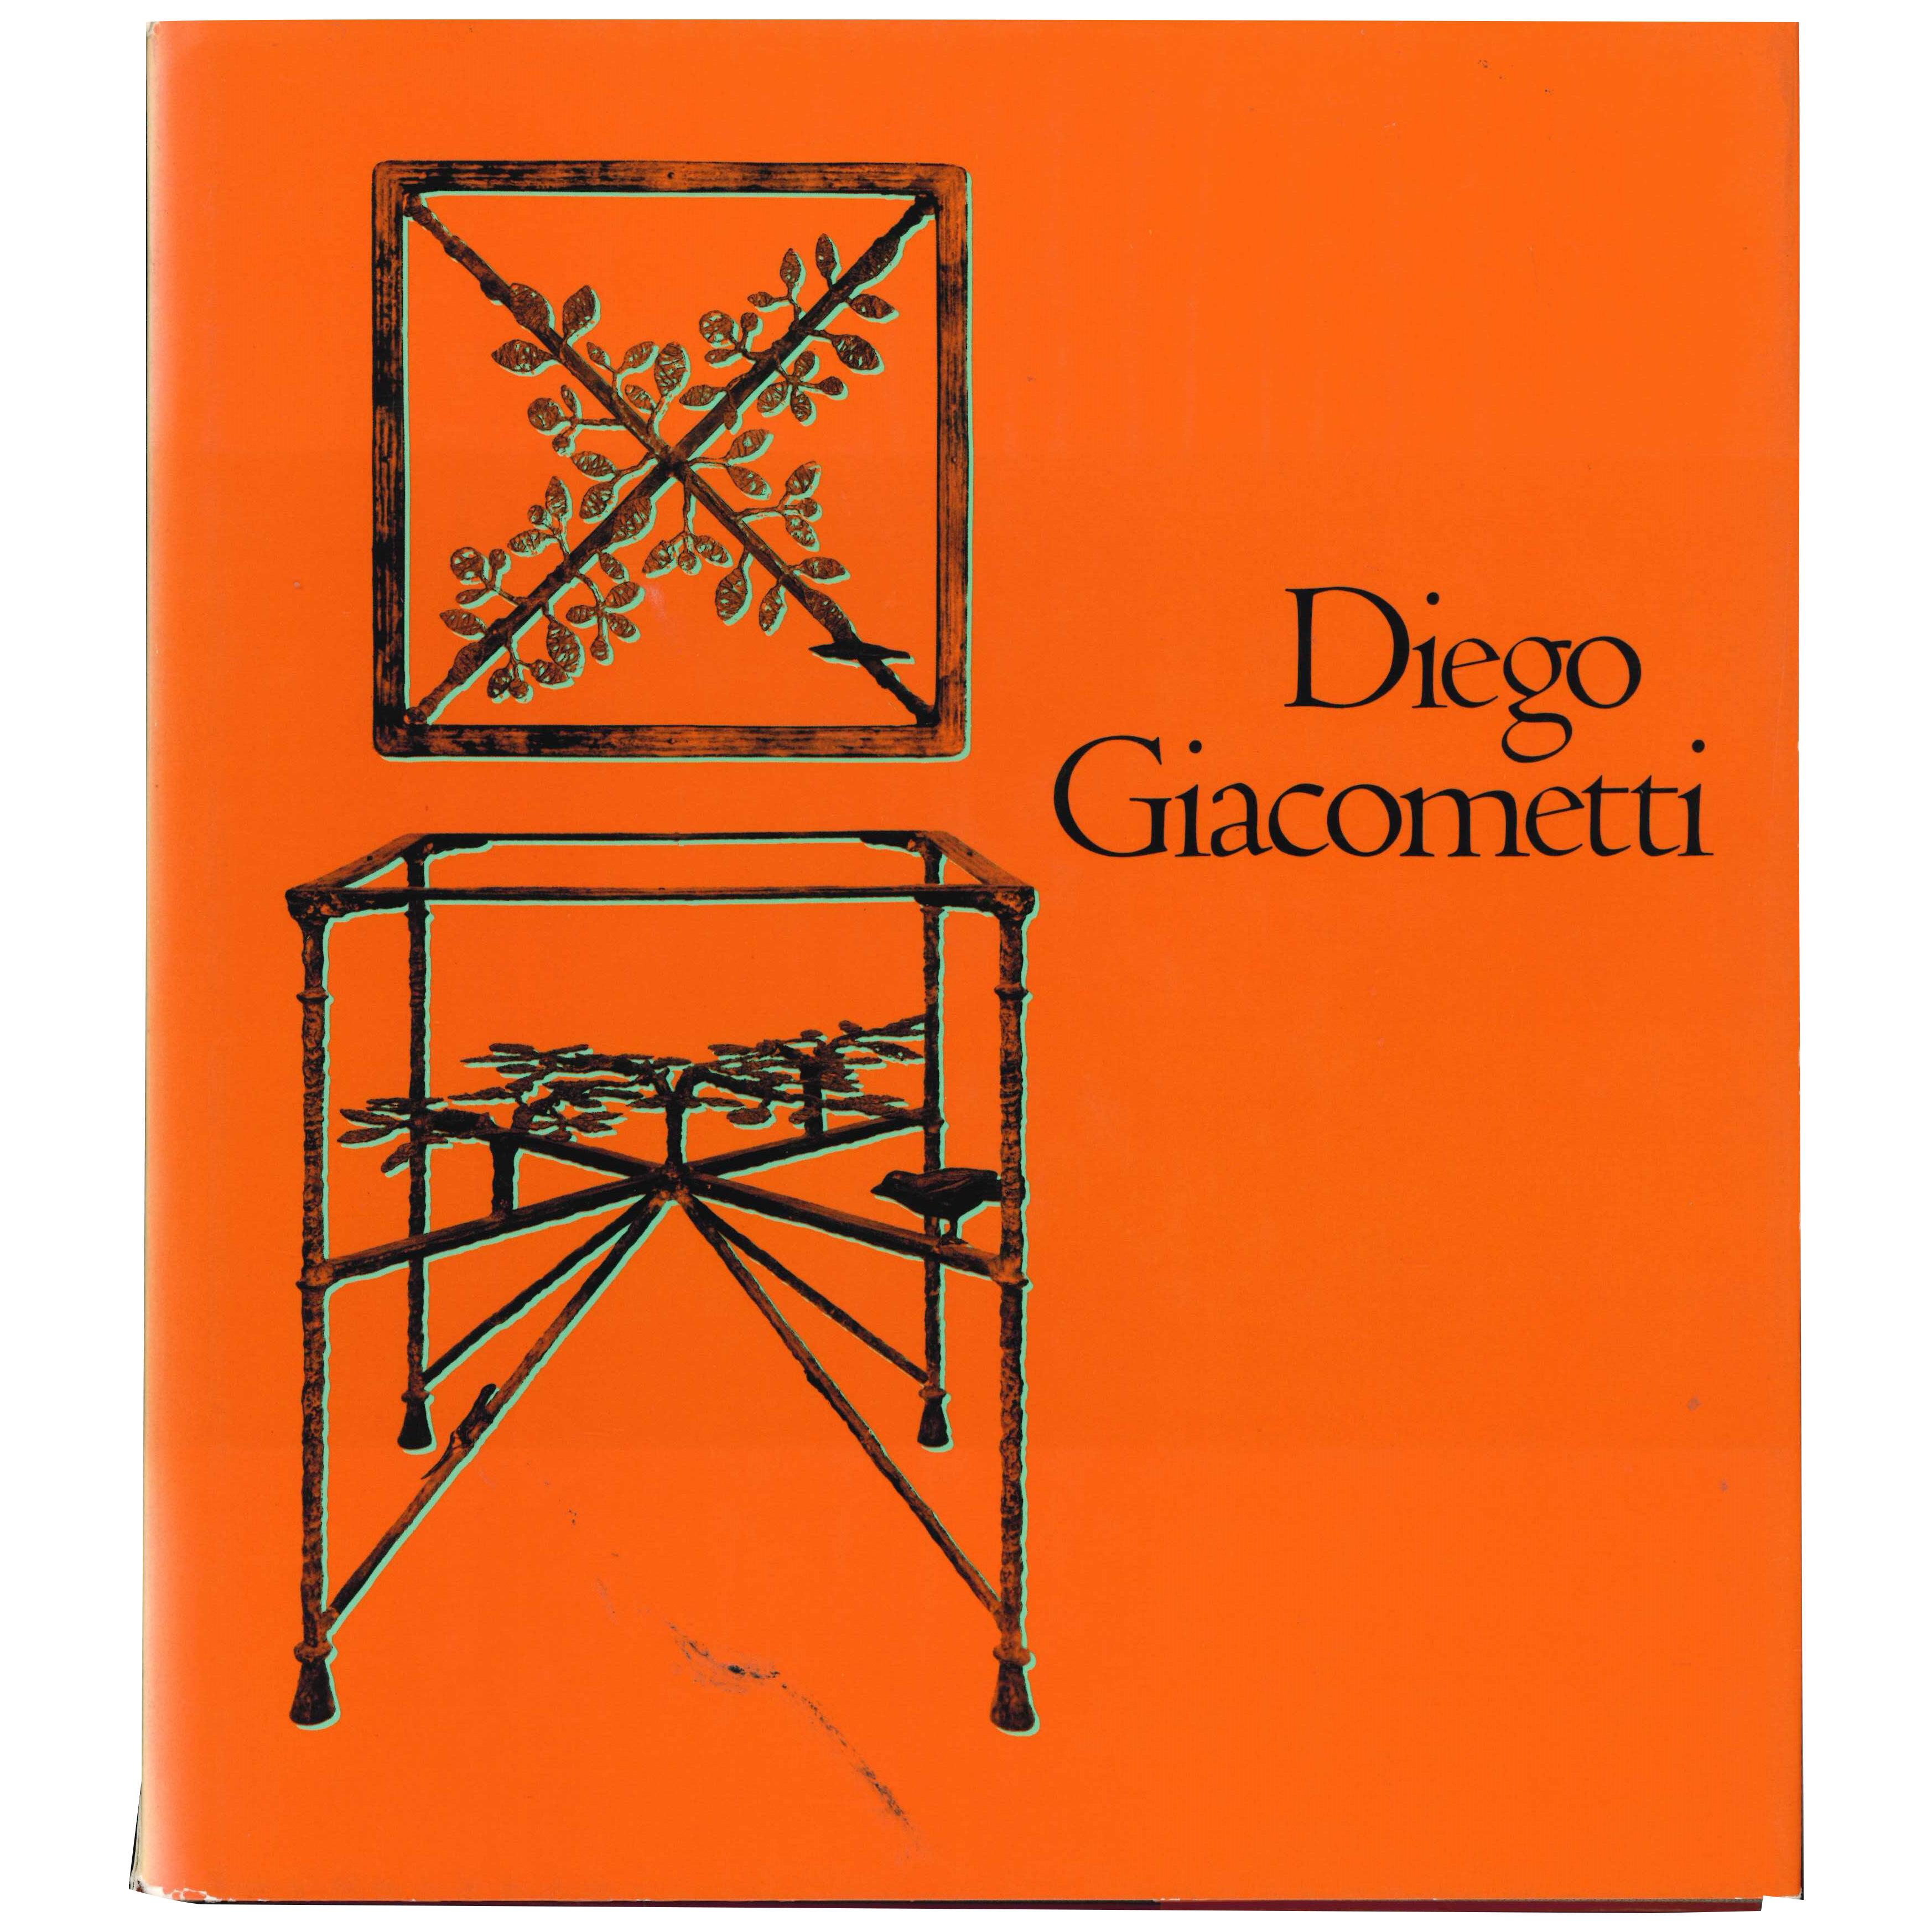 DIEGO GIACOMETTI. Book